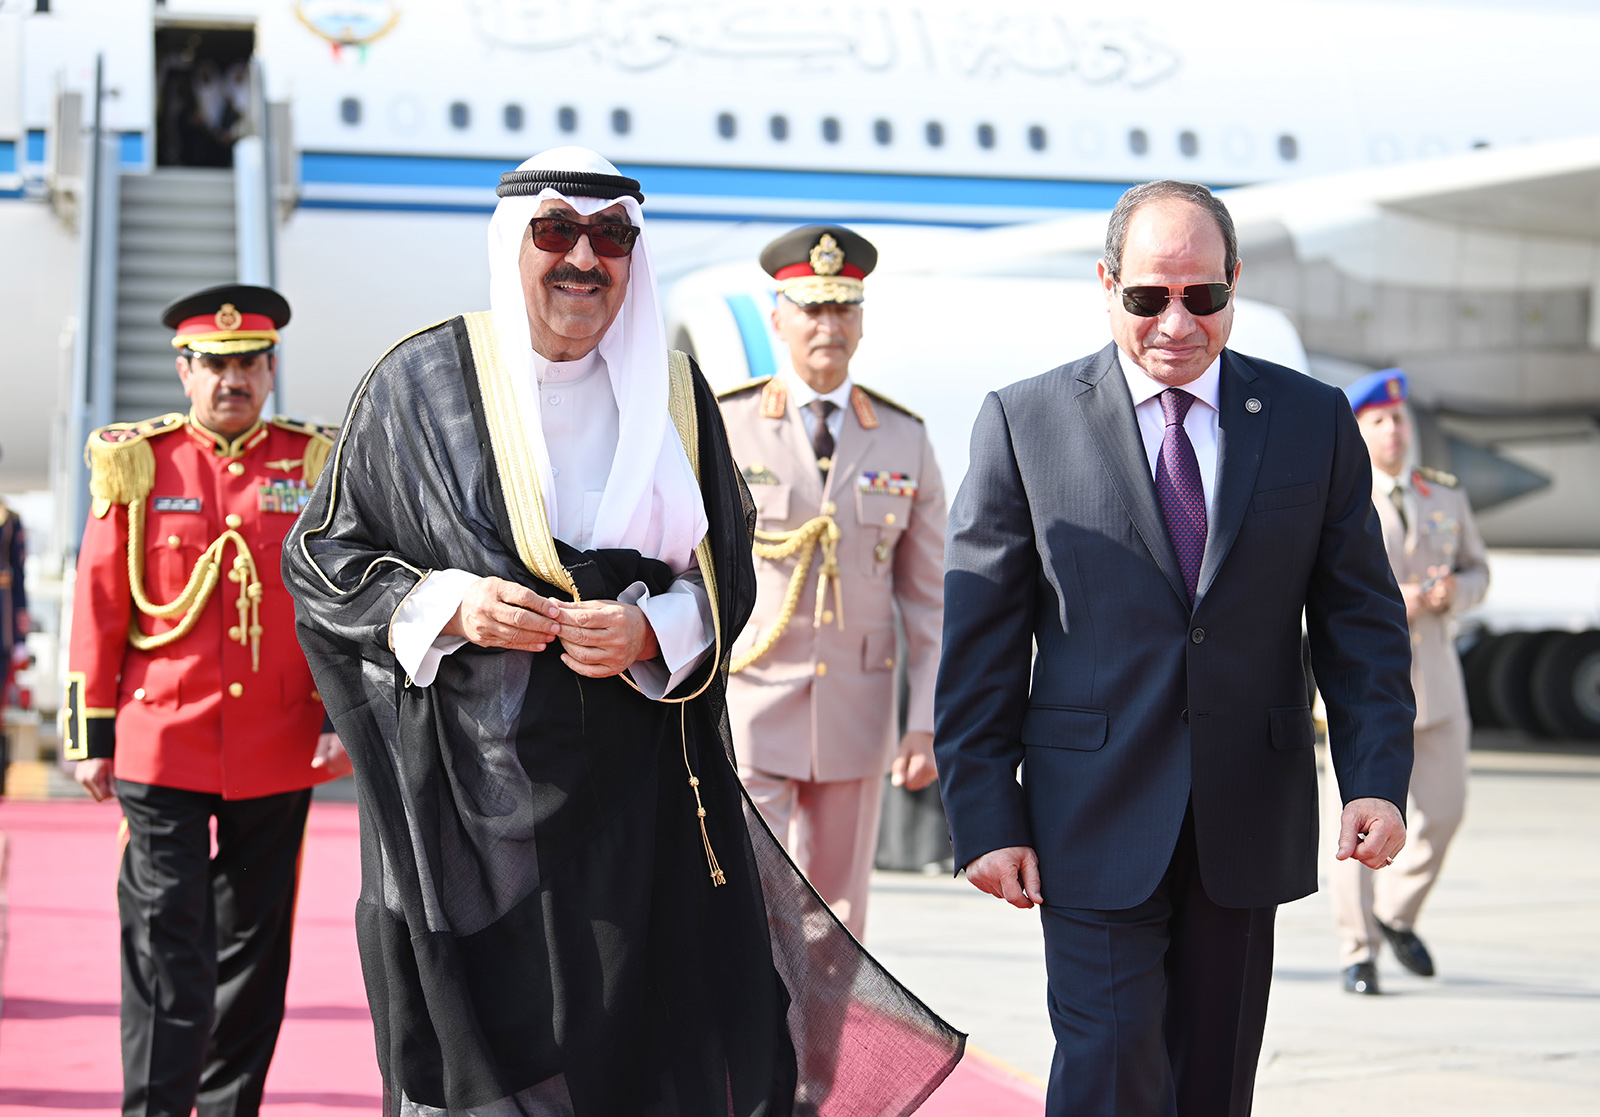 His Highness the Amir Sheikh Mishal Al-Ahmad Al-Jaber Al-Sabah was received by Egyptian President Abdulfattah Al-Sisi